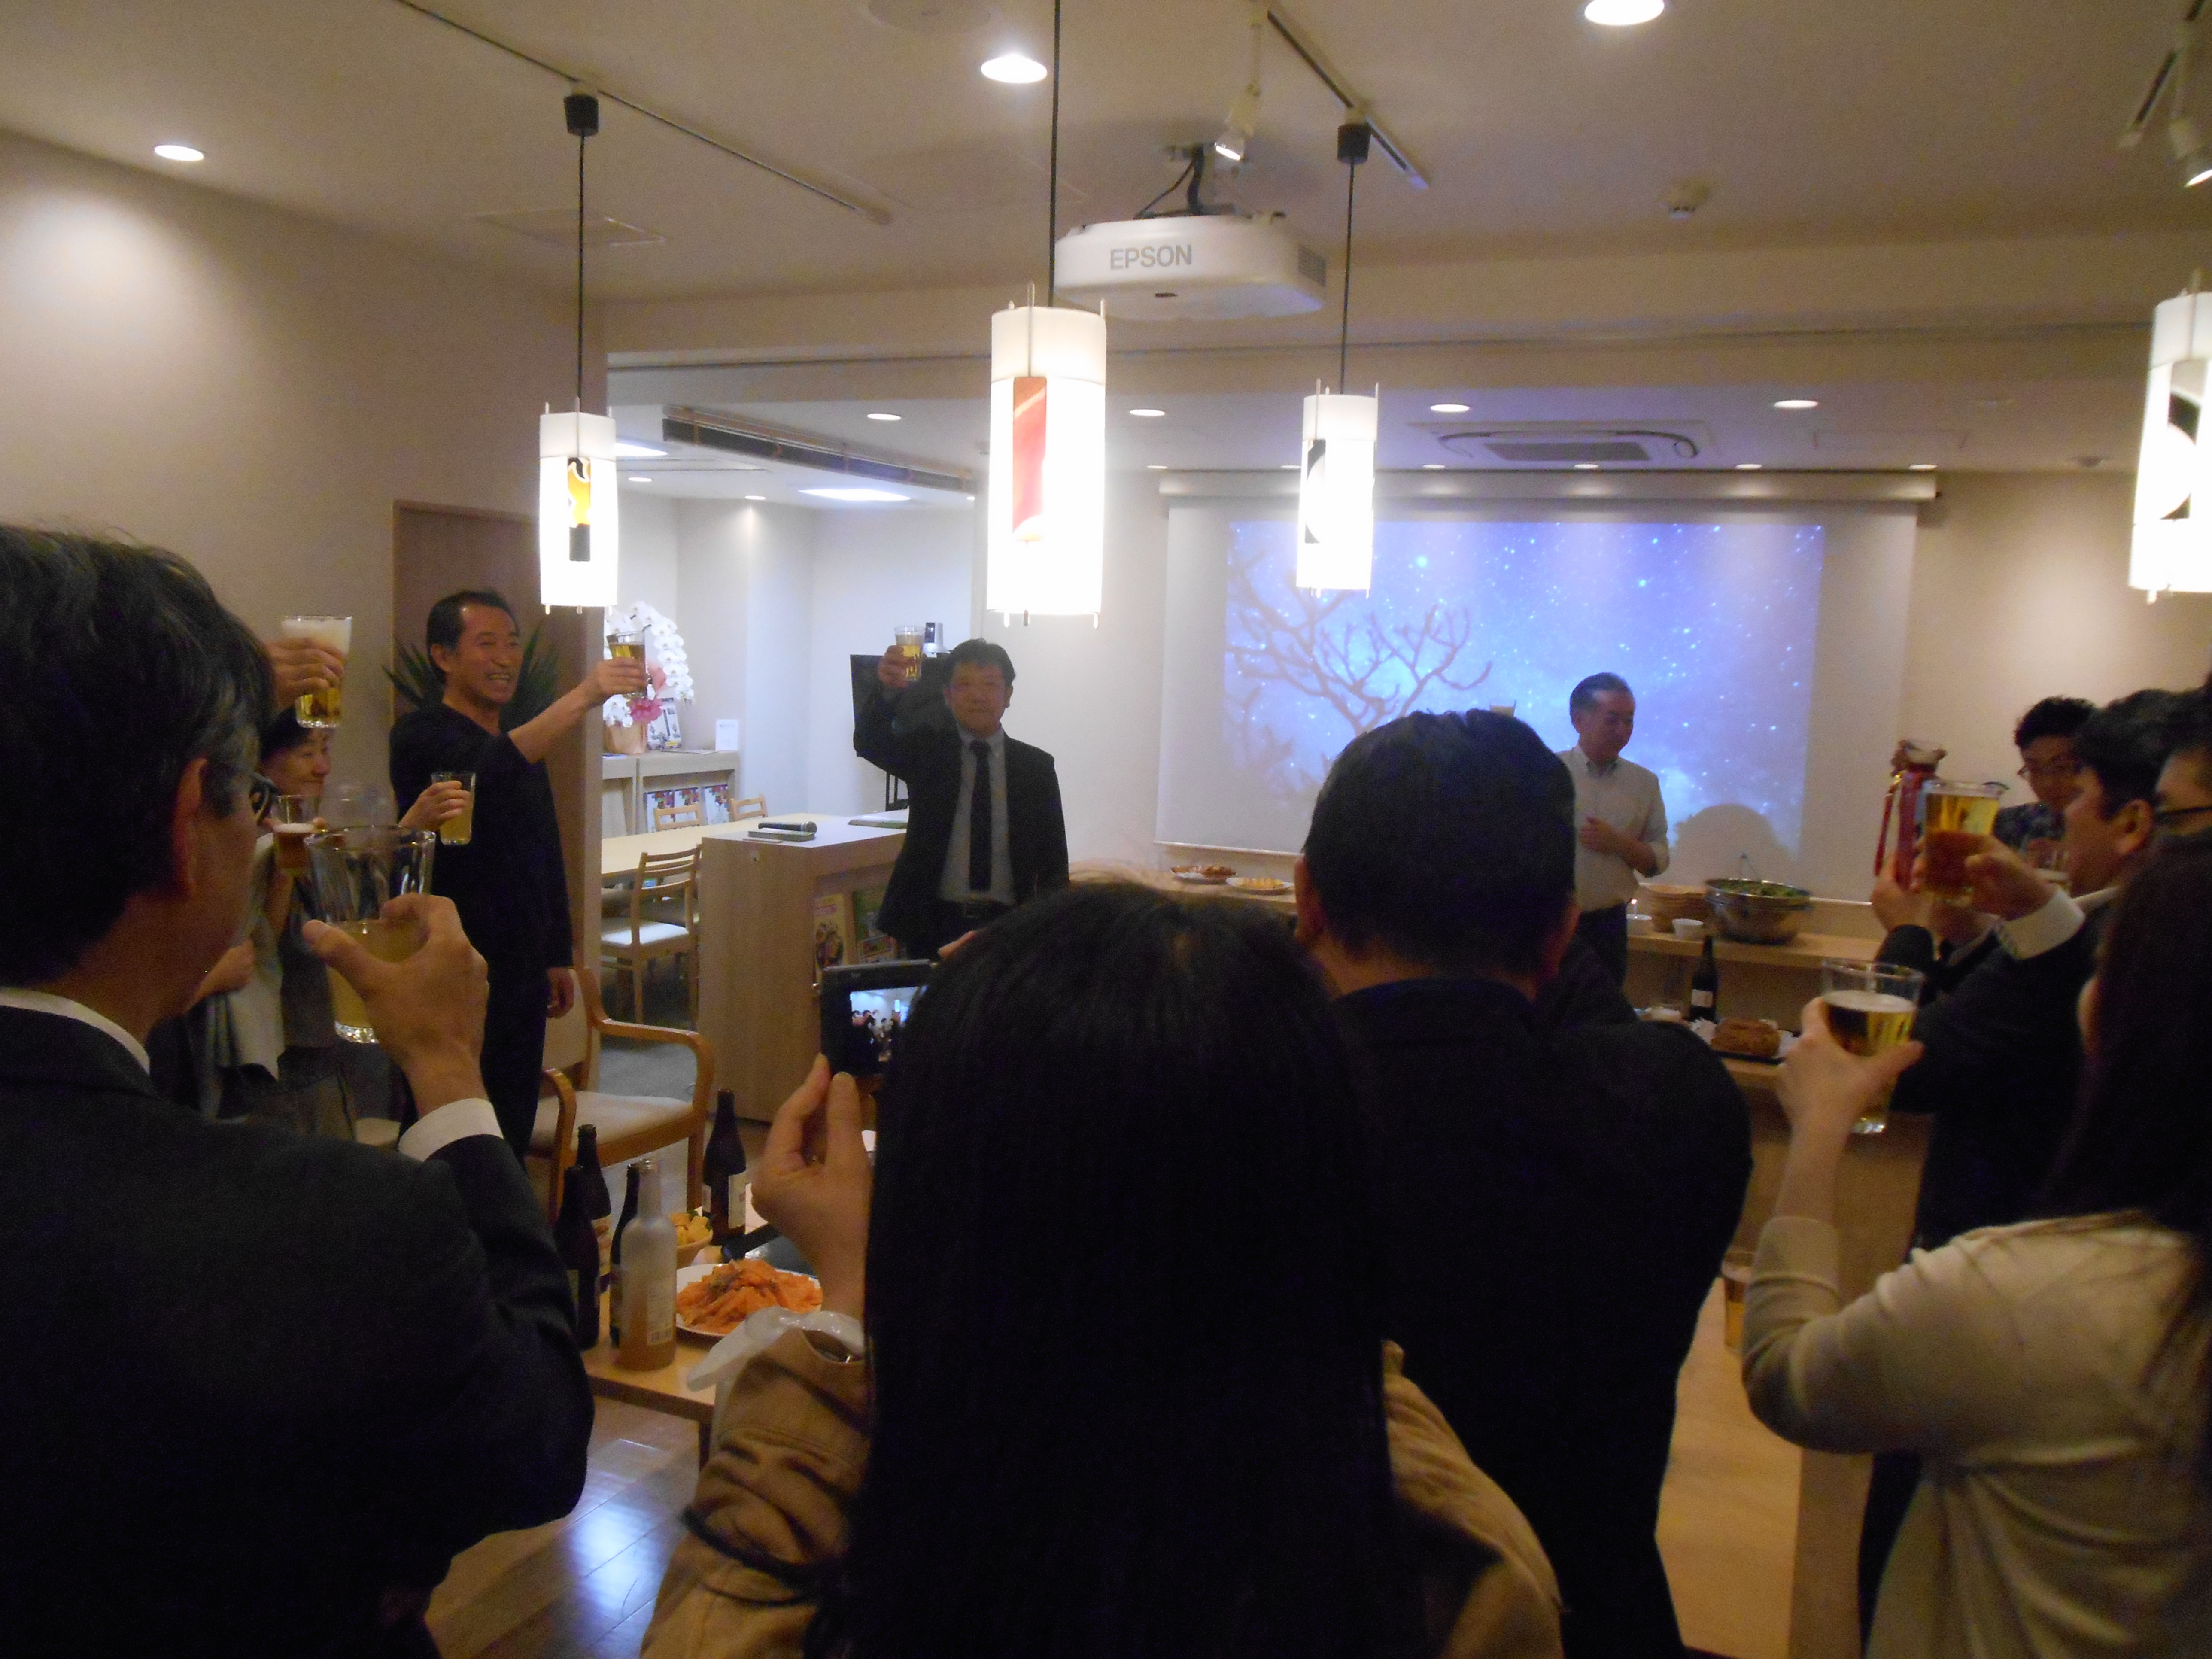 DSCN1590 1 - AoMoLink〜赤坂〜の第2回勉強会&交流会開催します。